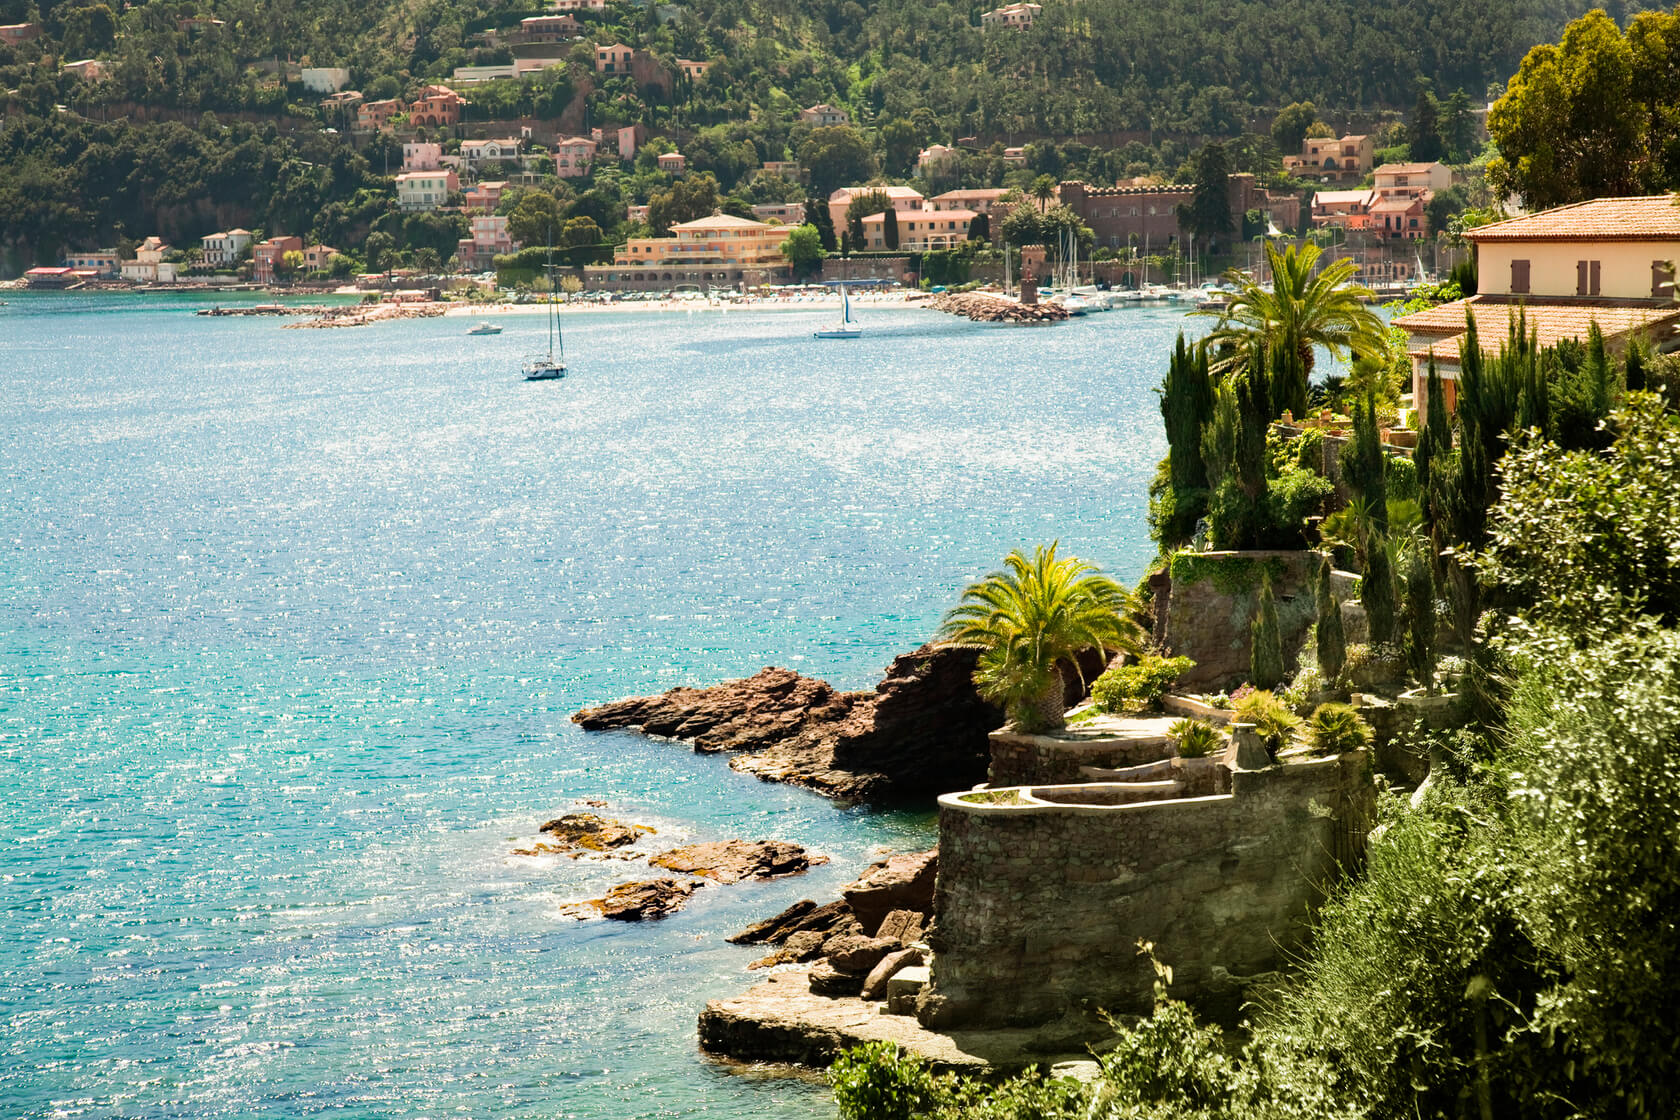 Cote d'Azul coastline and villes, south of Cannes.